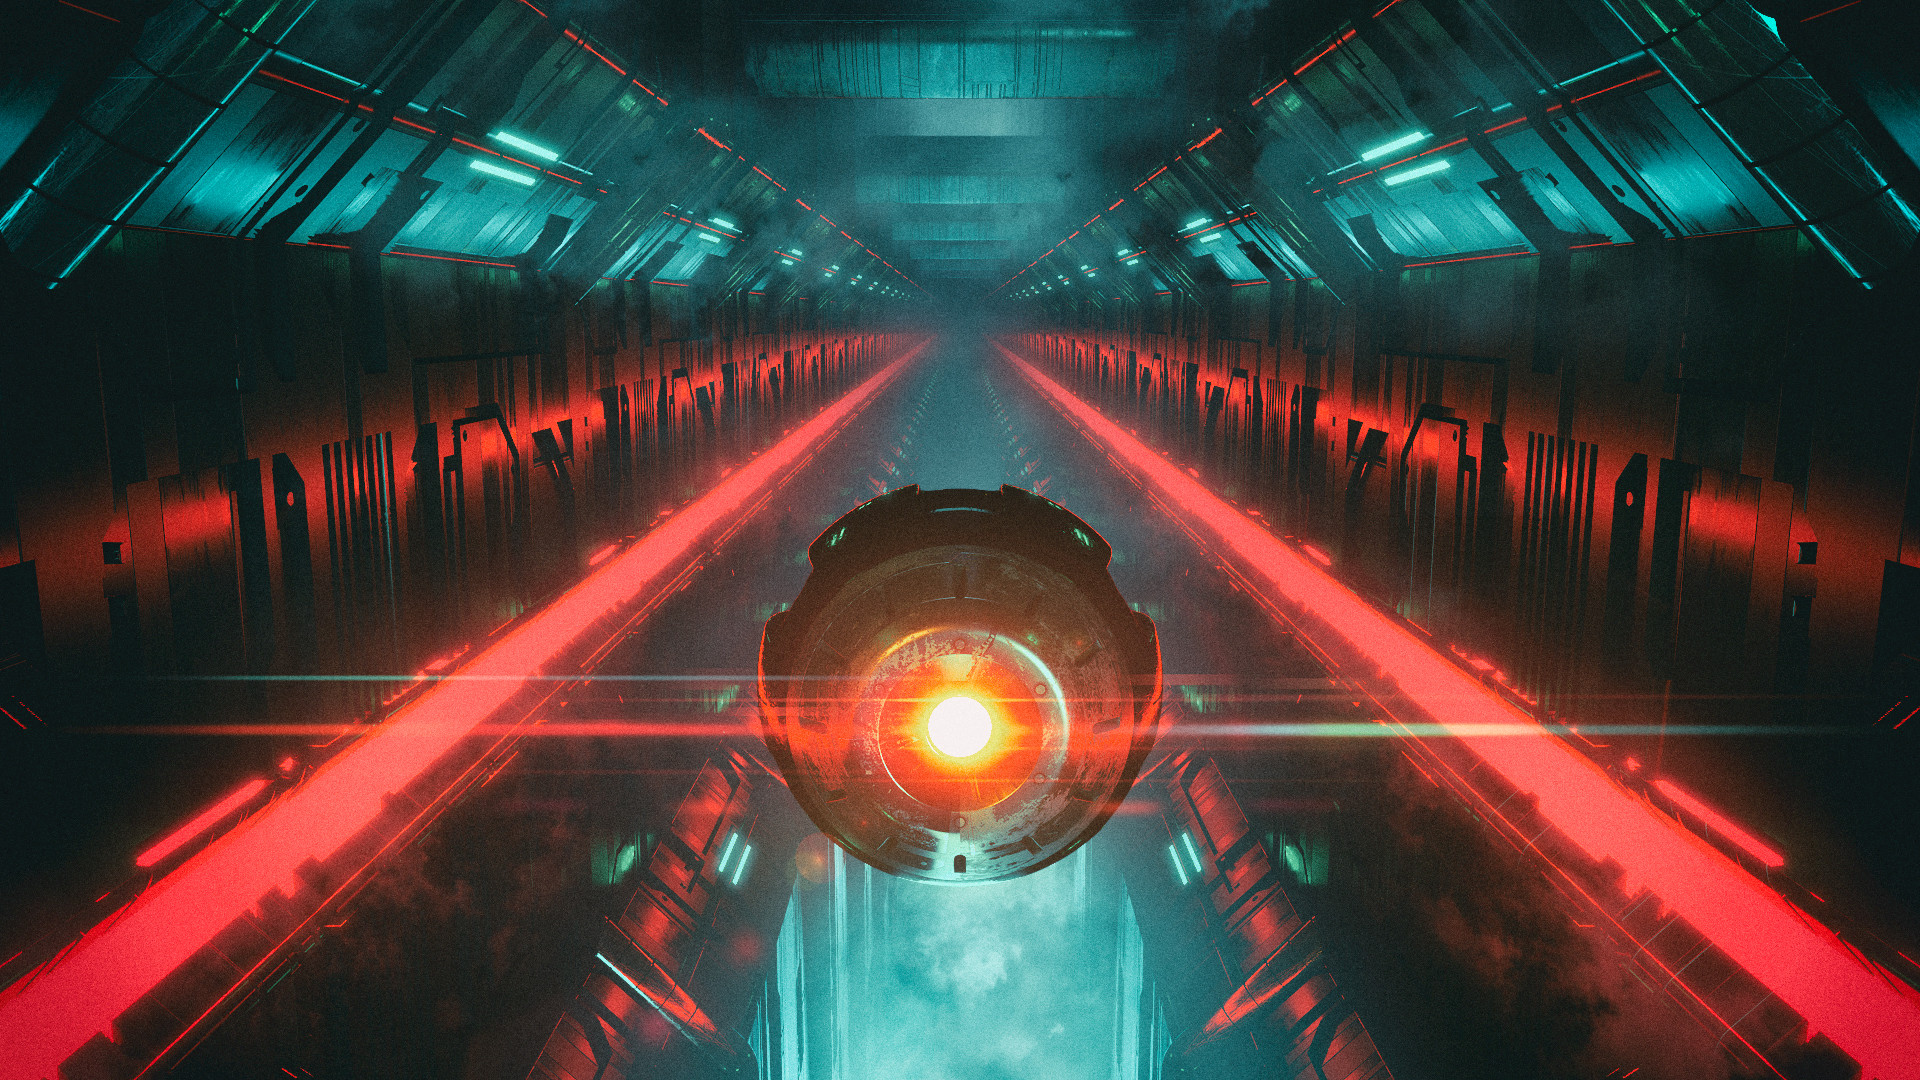 General 1920x1080 David Legnon hallway cyberpunk science fiction red light red orb glowing